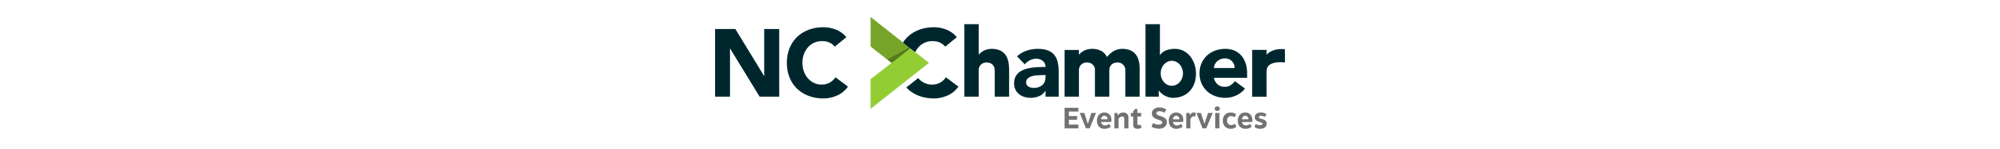 Event Services Logo